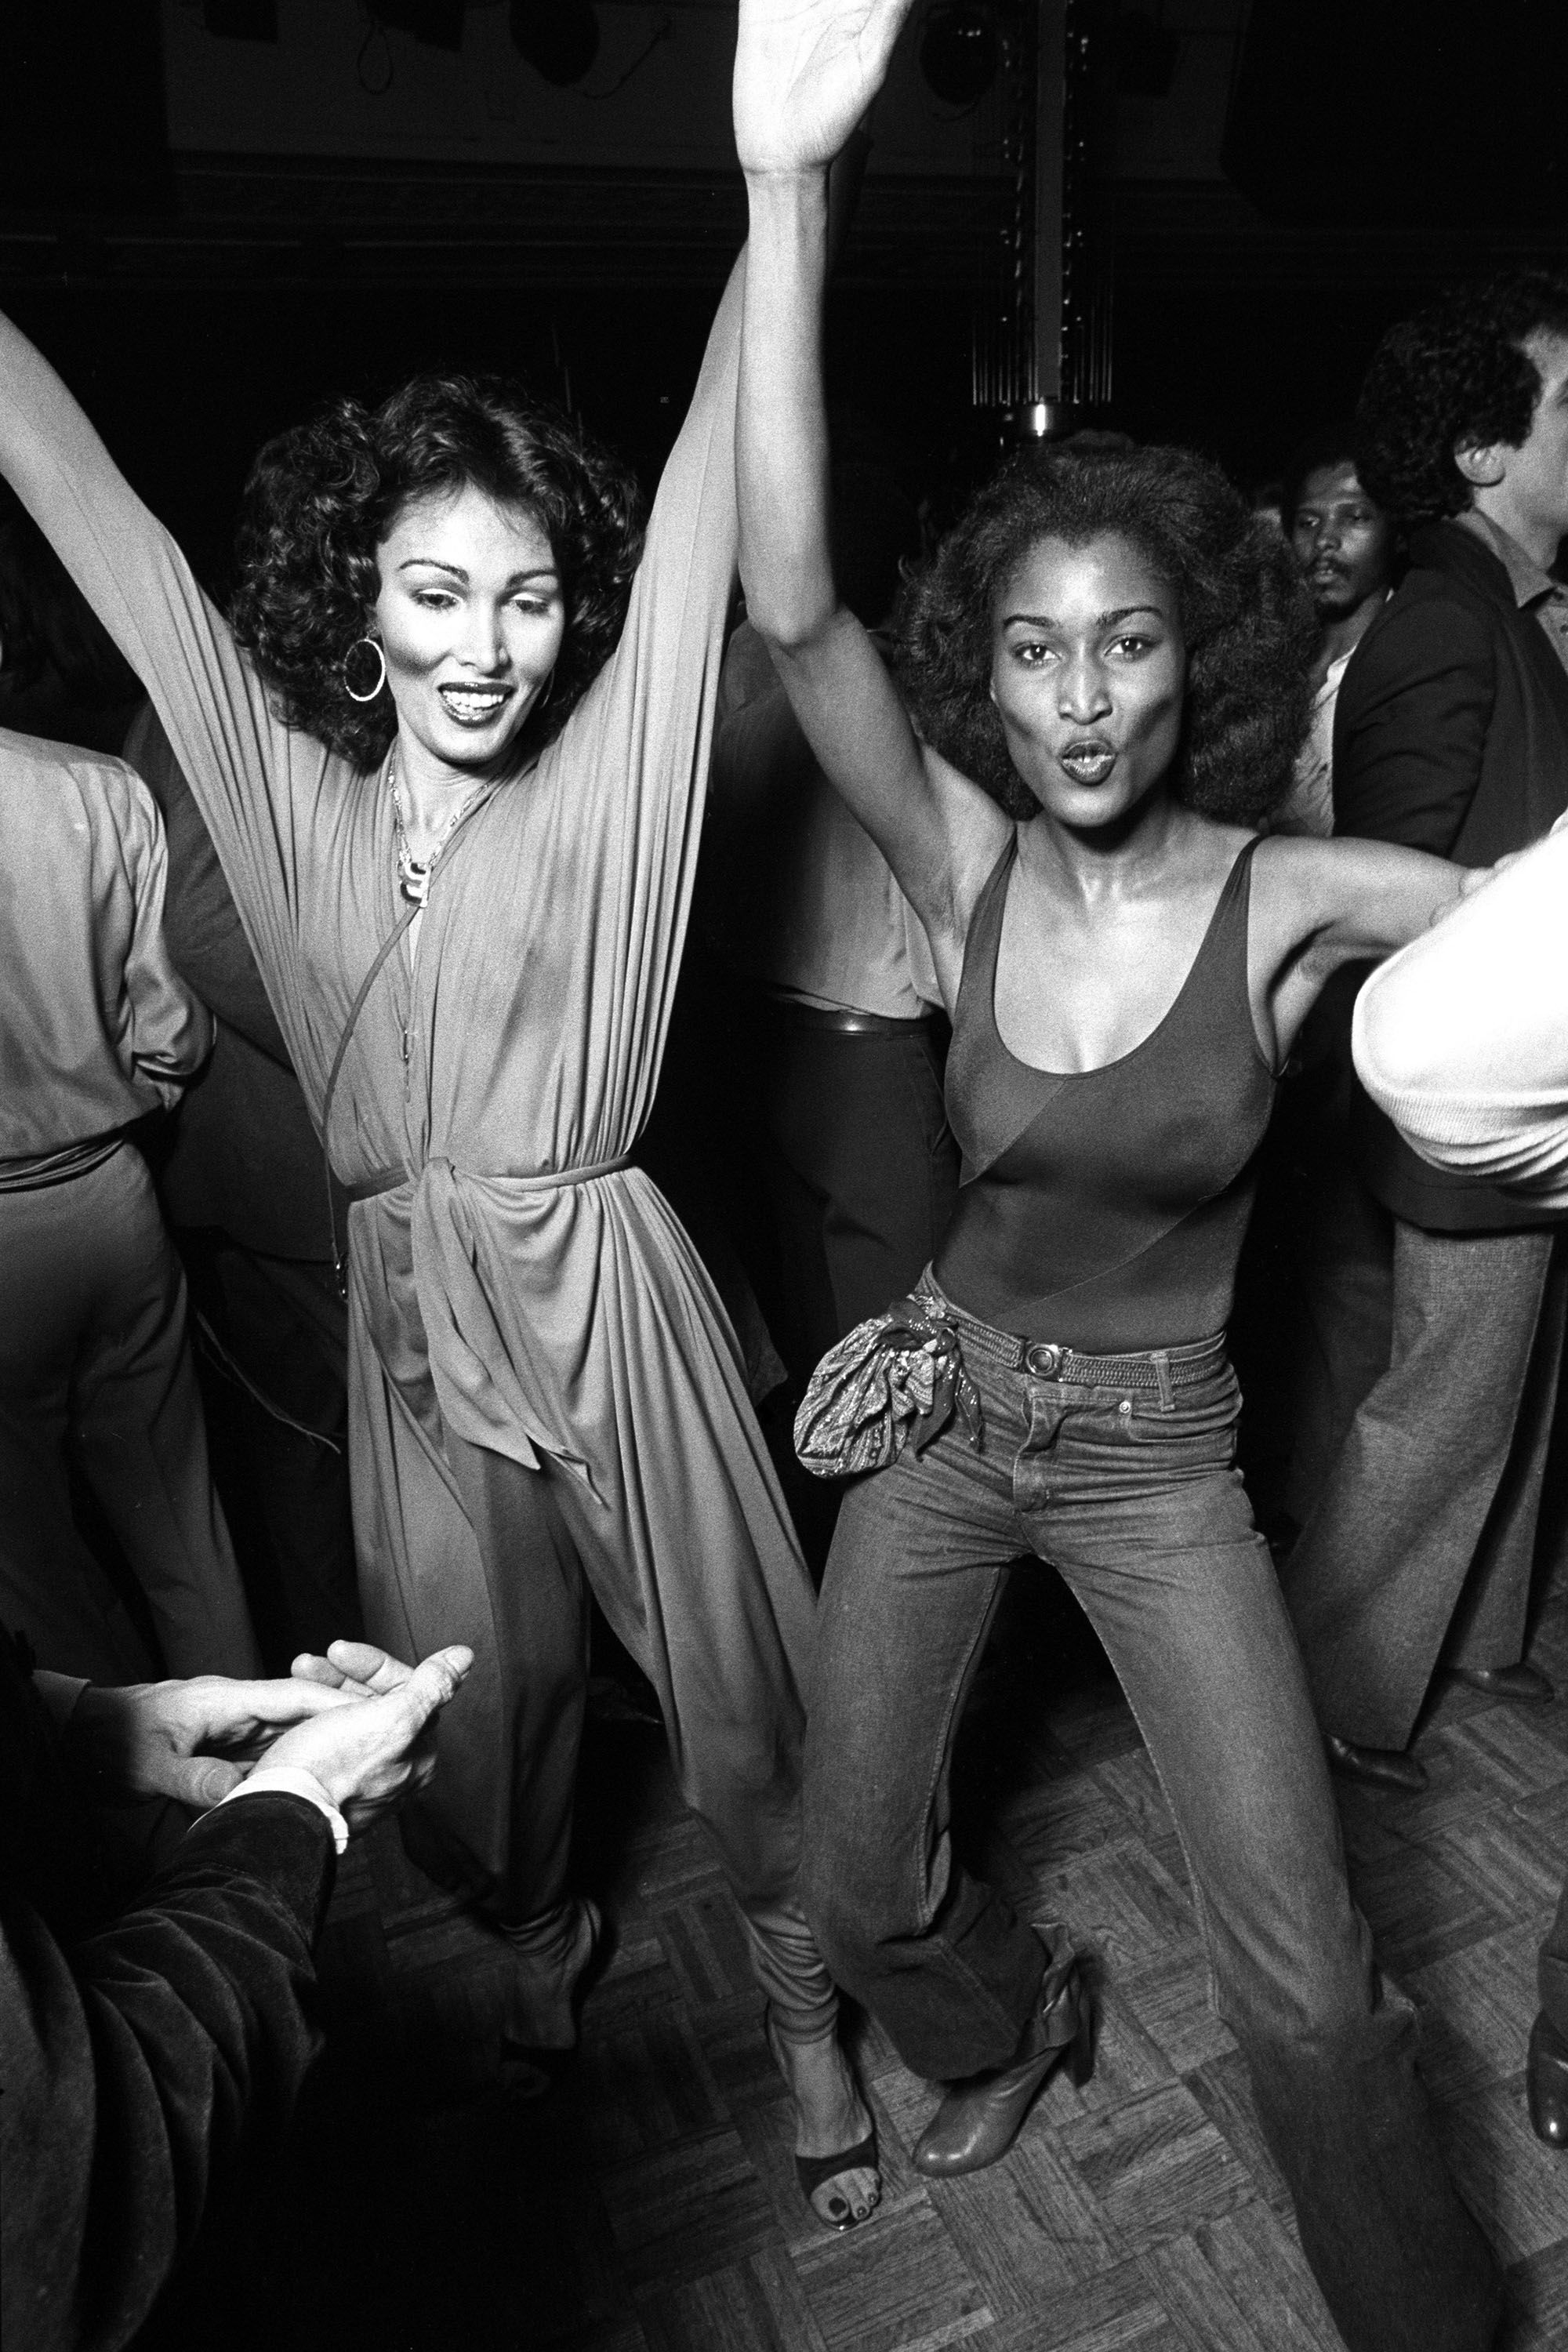 Vintage Photos of Disco Fever and Studio 54 Scene - 40th